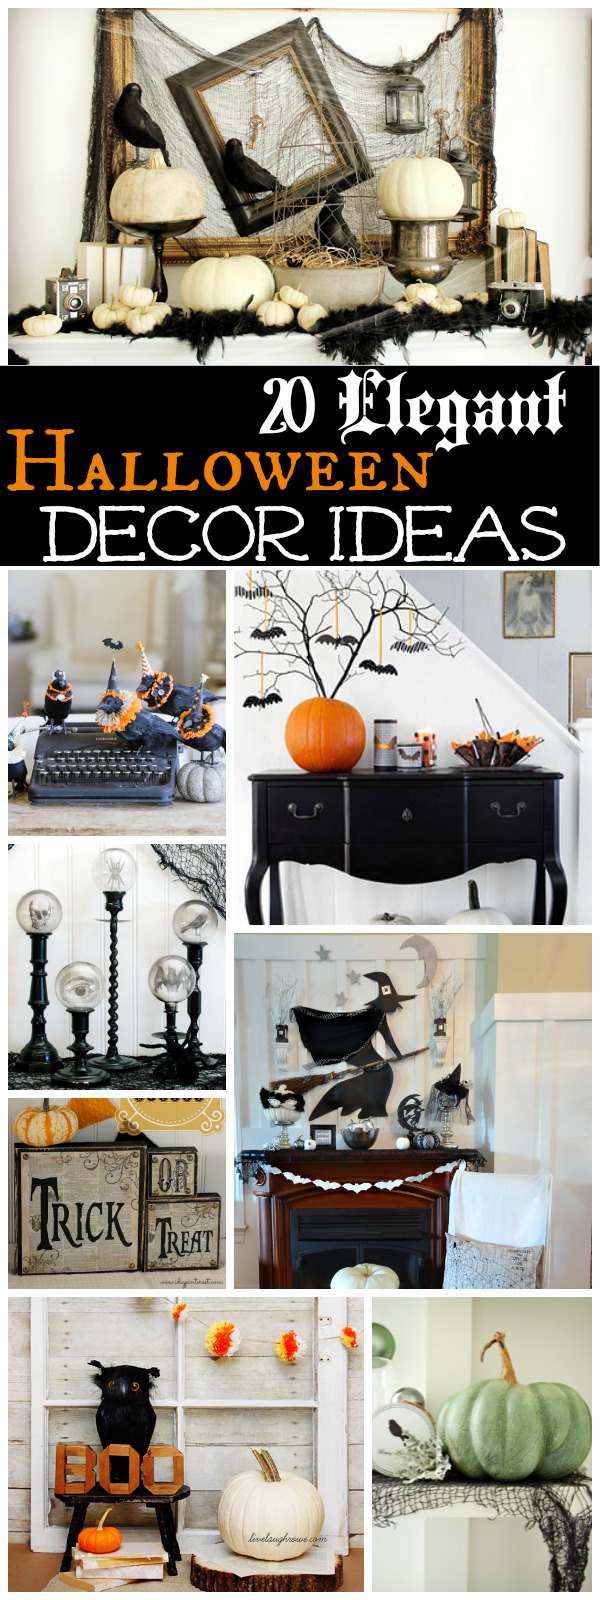 Elegant Halloween Decor Ideas poster.